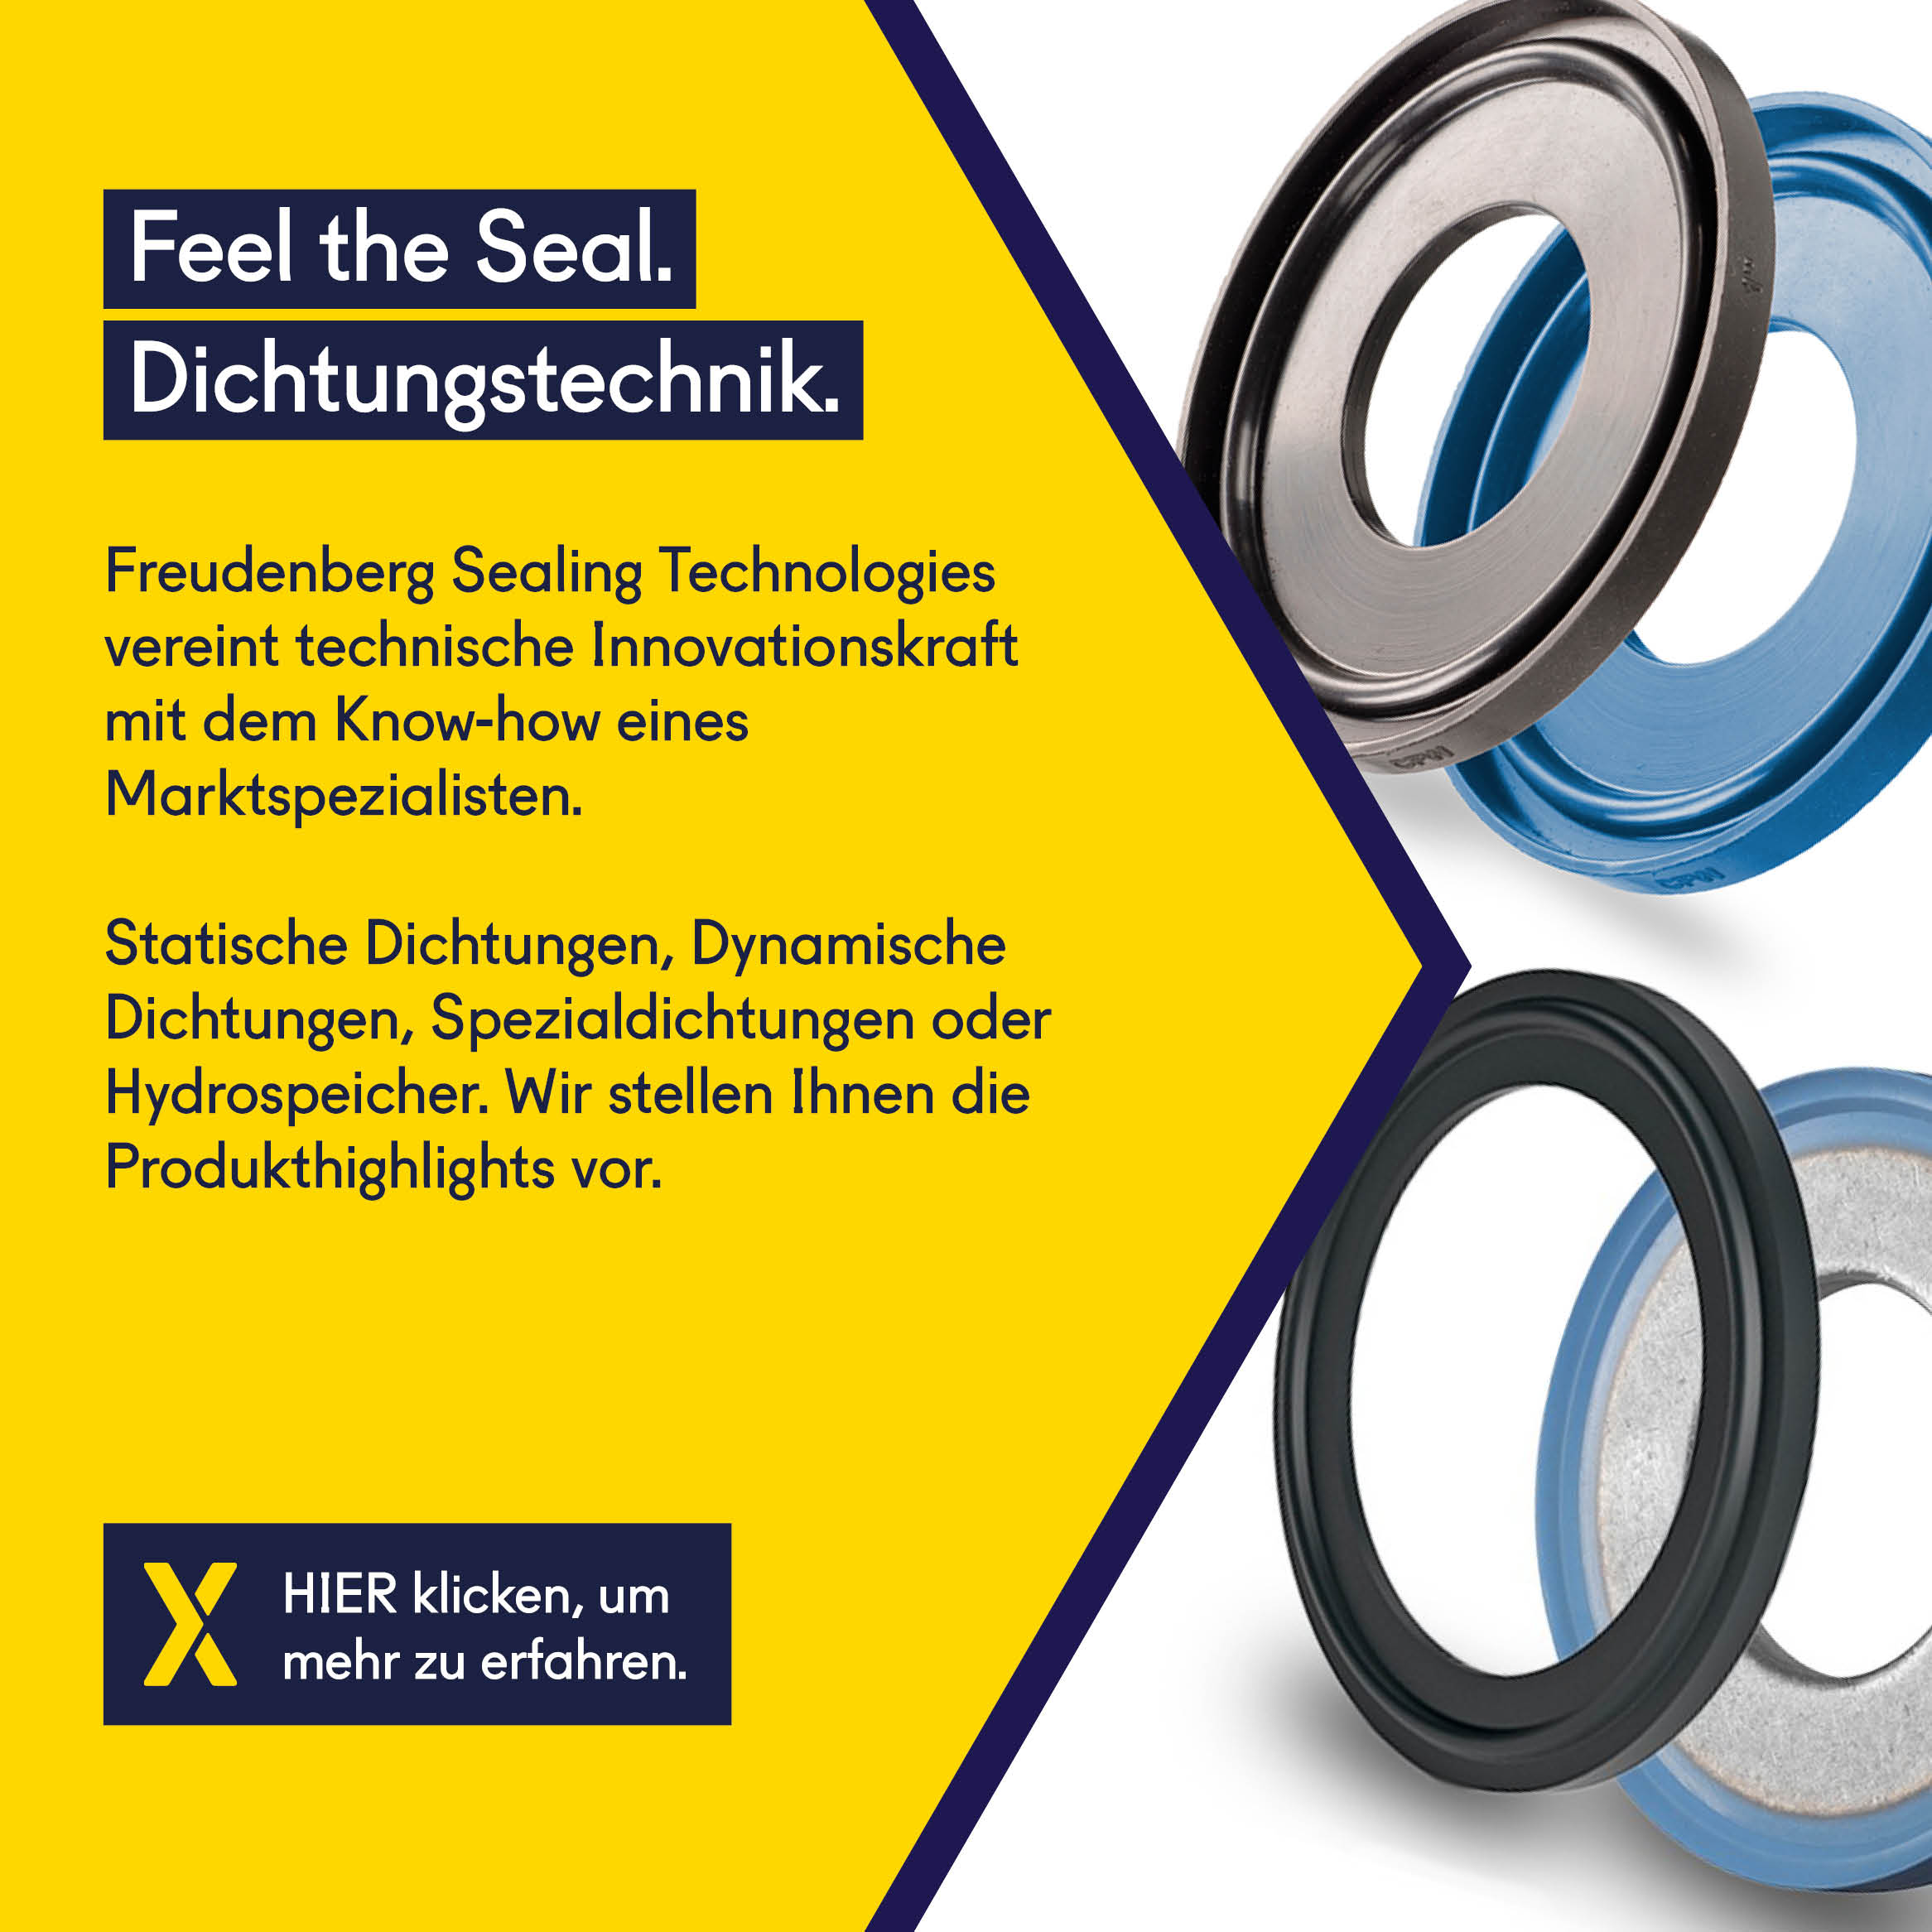 Feel the Seal - Dichtungstechnik